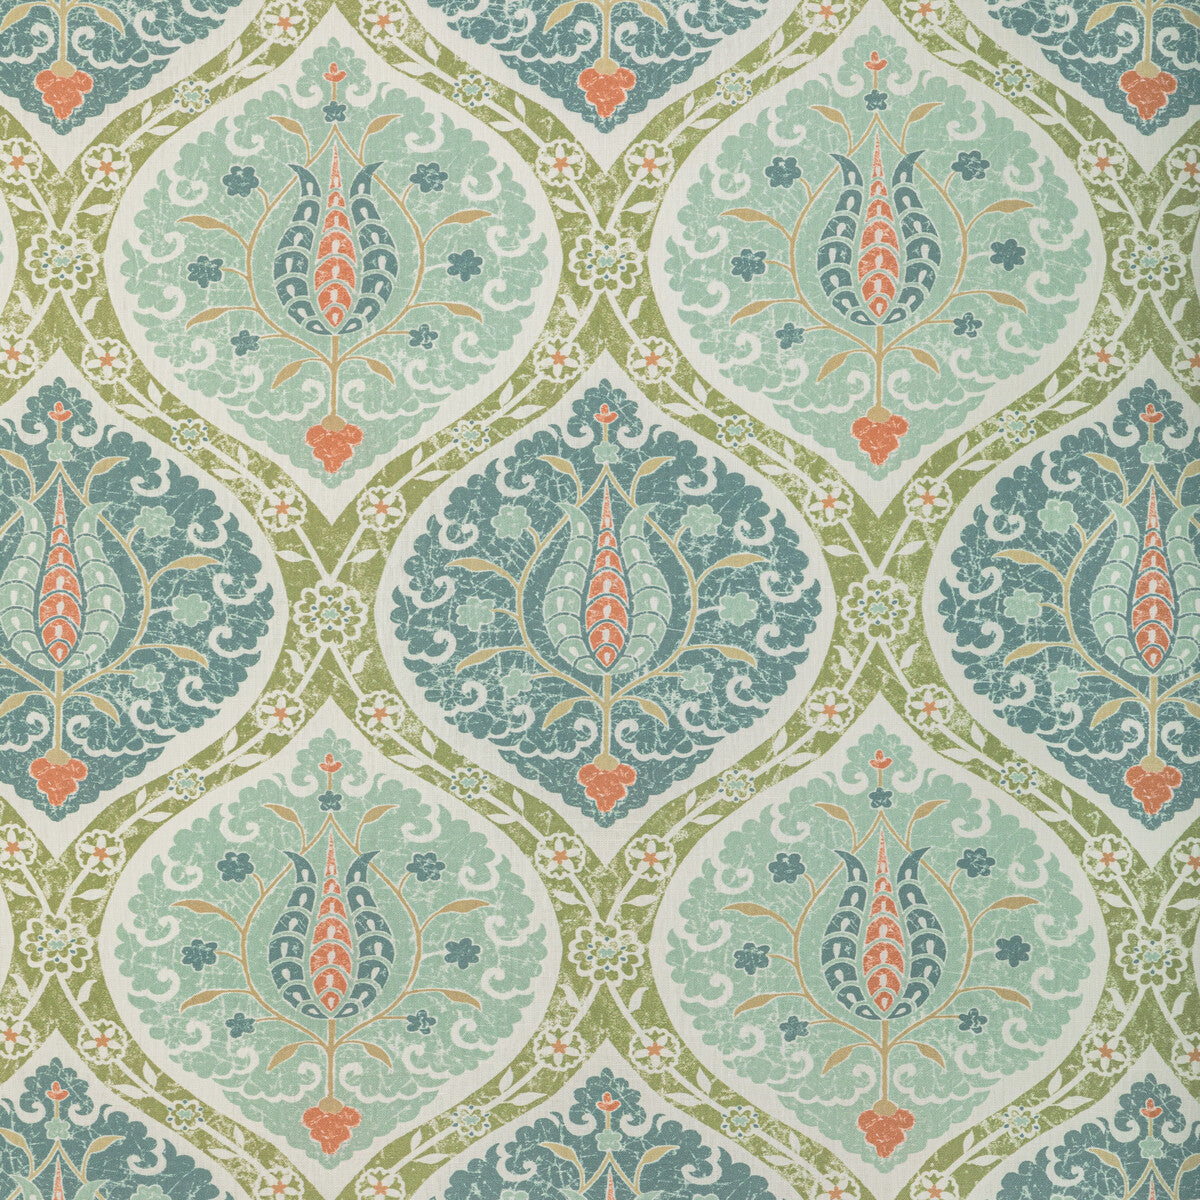 San Polo fabric in lagoon color - pattern SAN POLO.35.0 - by Kravet Basics